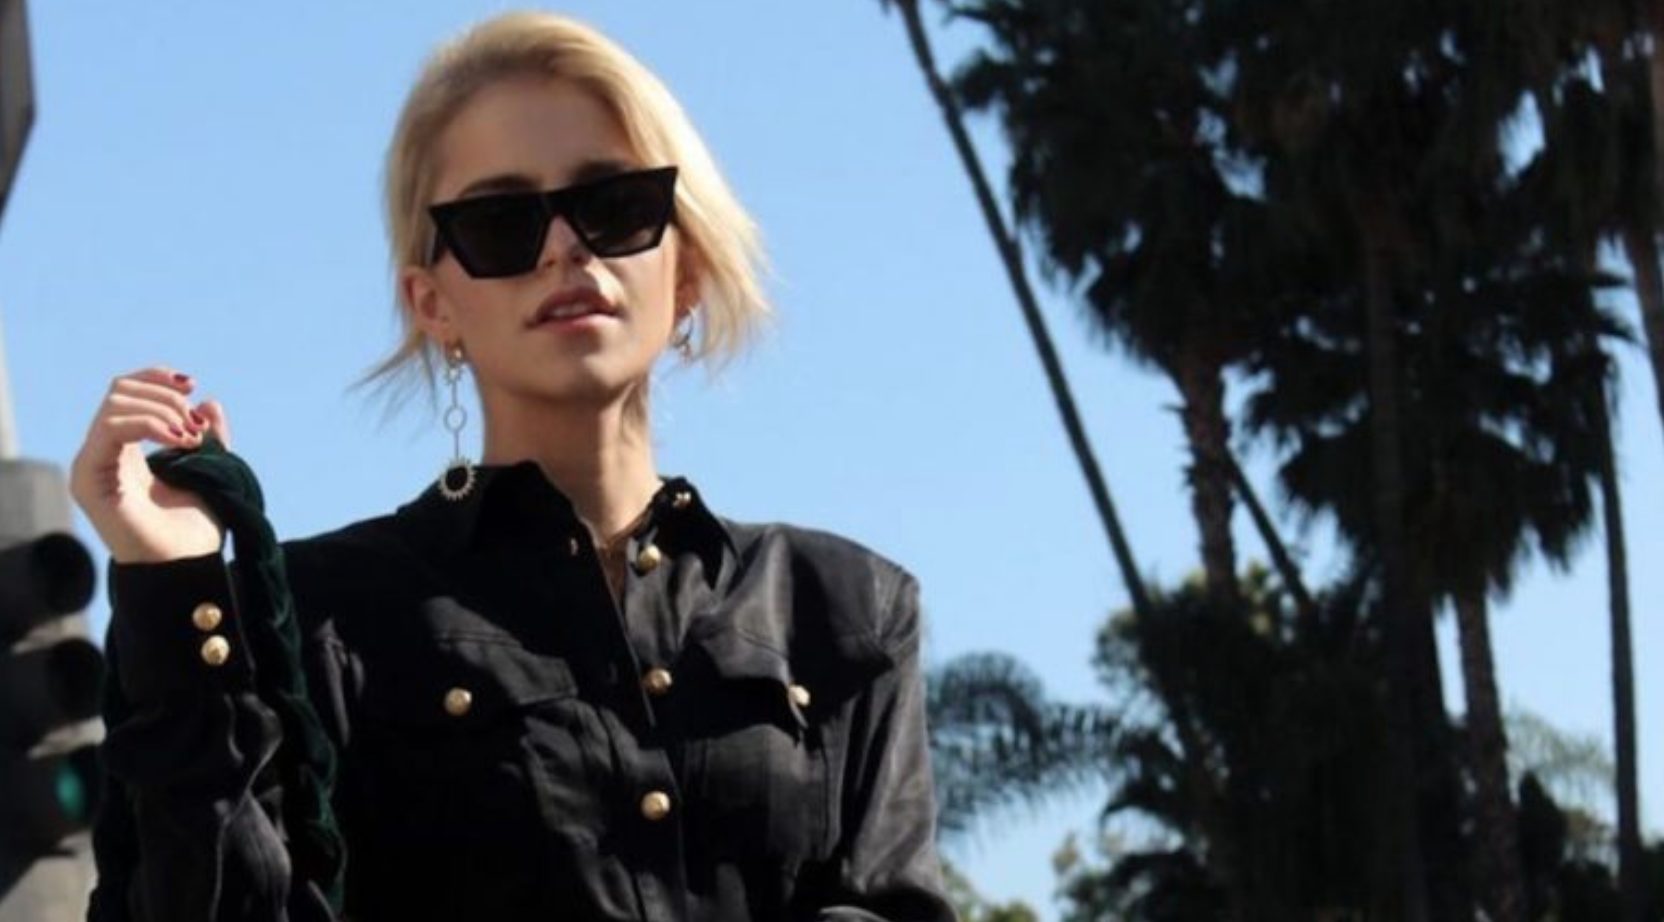 Caroline Daur walks past palm trees in black sunglasses and a leather jacket.